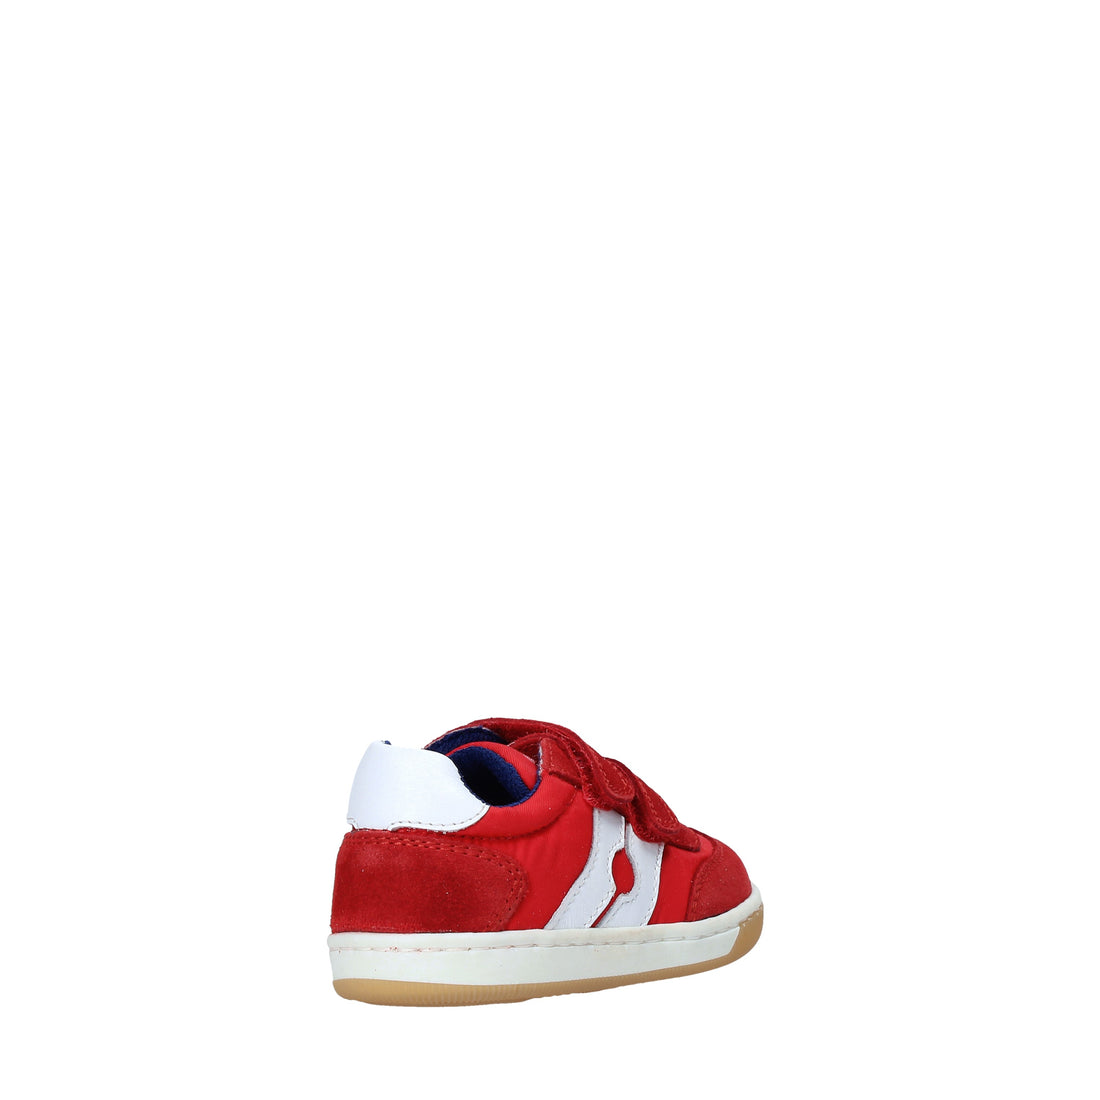 Sneakers Rosso Falcotto